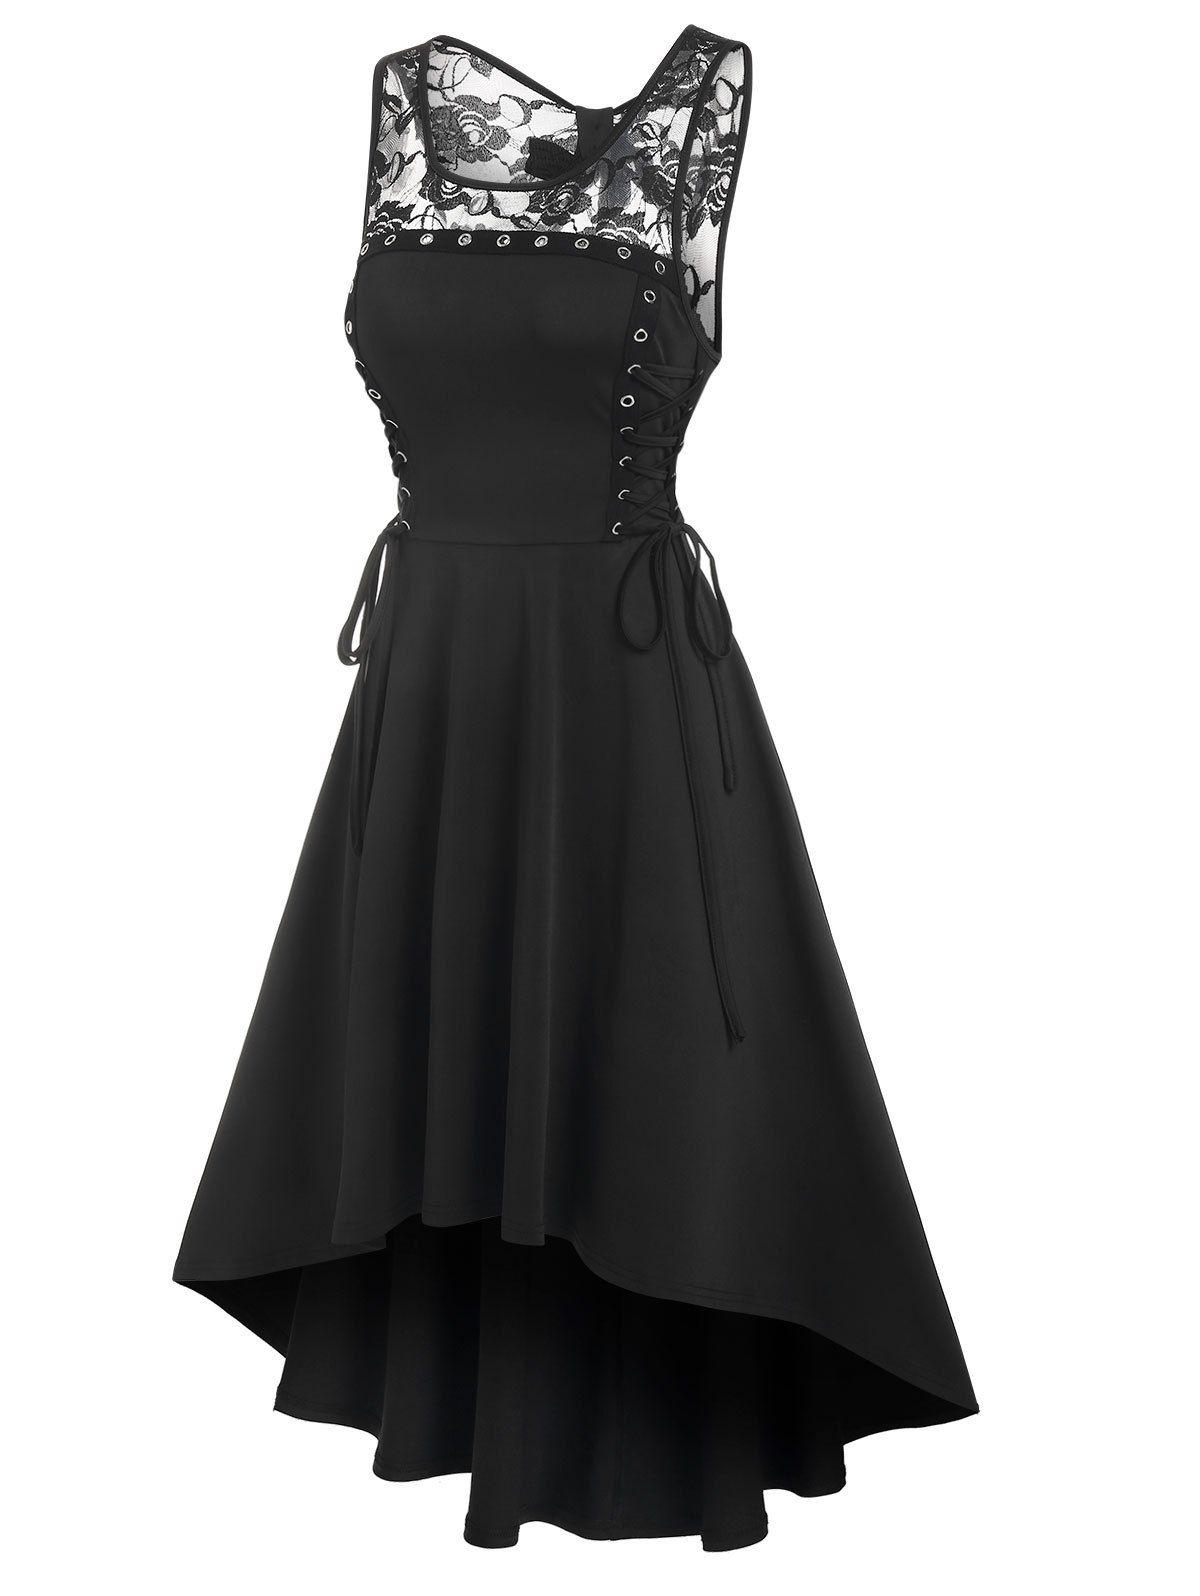 Gothic Lace Panel Cutout High Low Dress - BLACK M